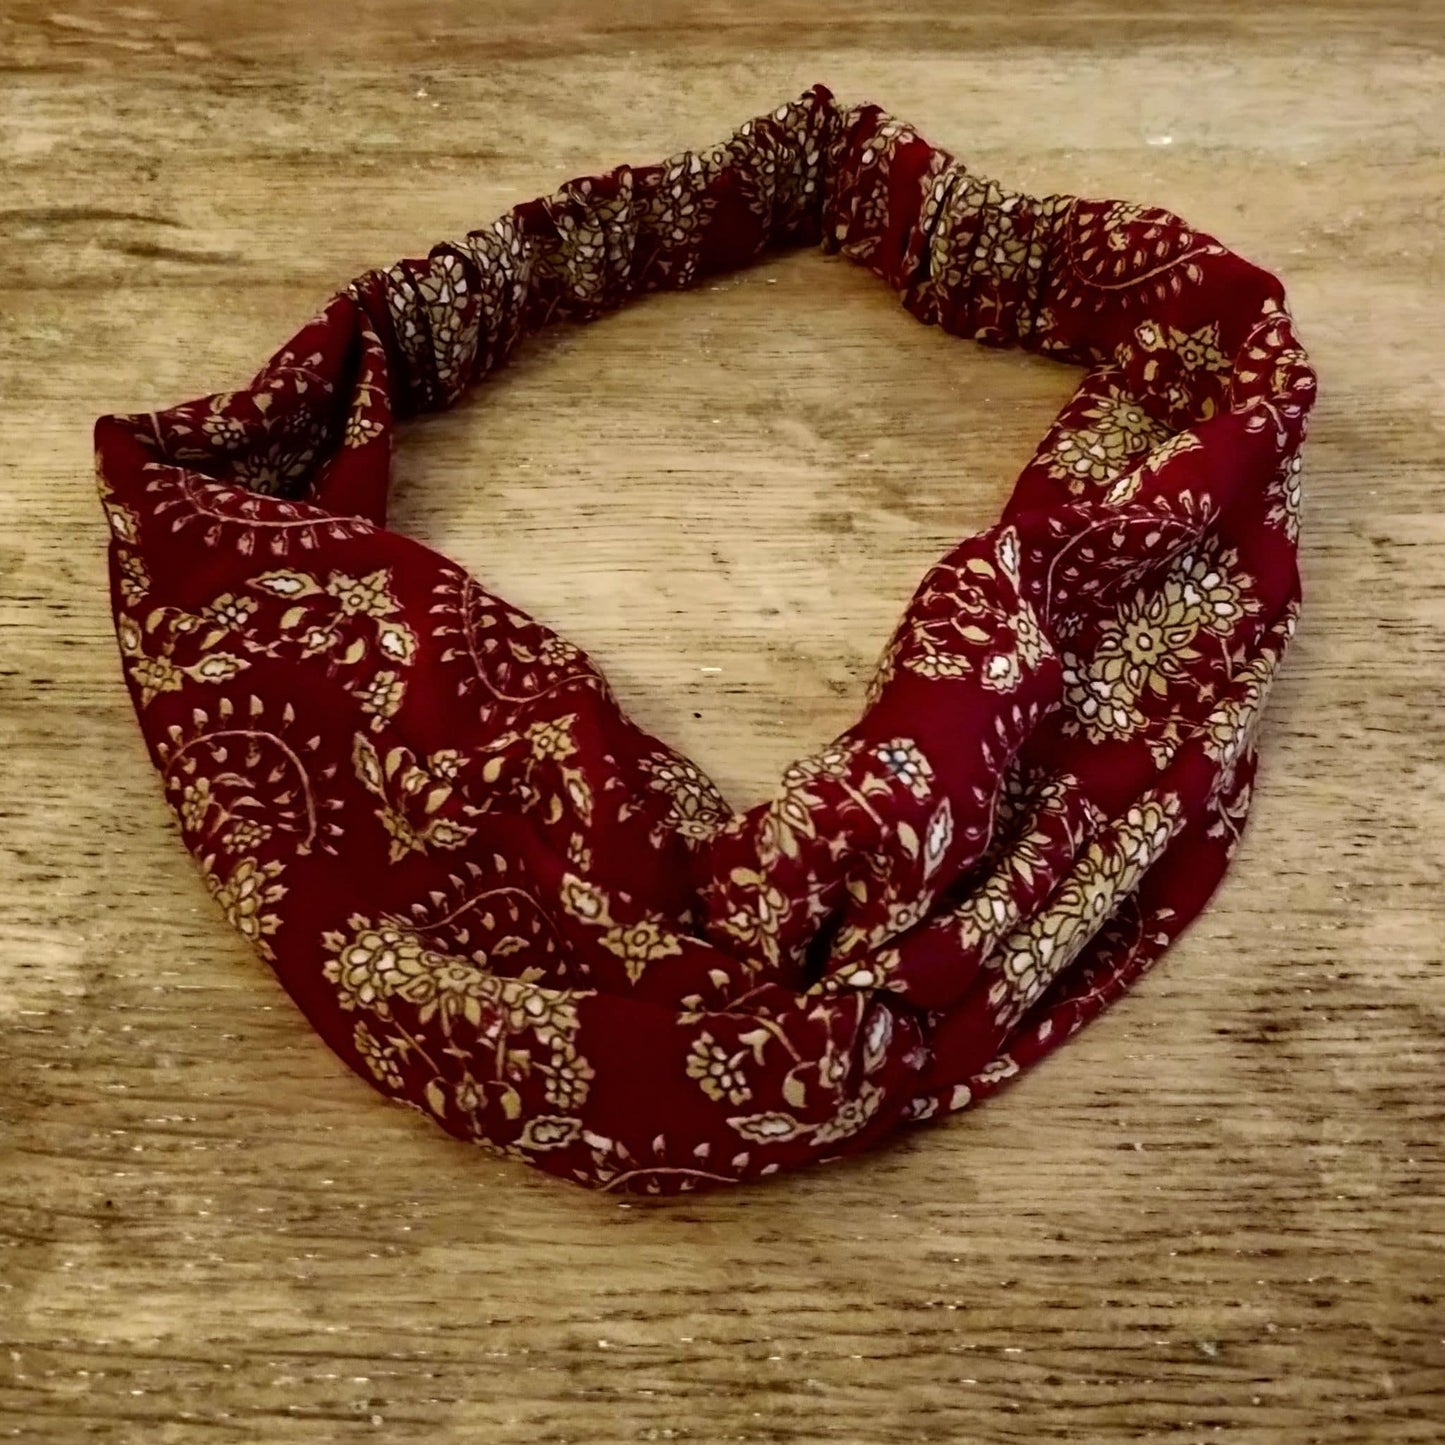 Turban Headband made from Upcycled Saris - red